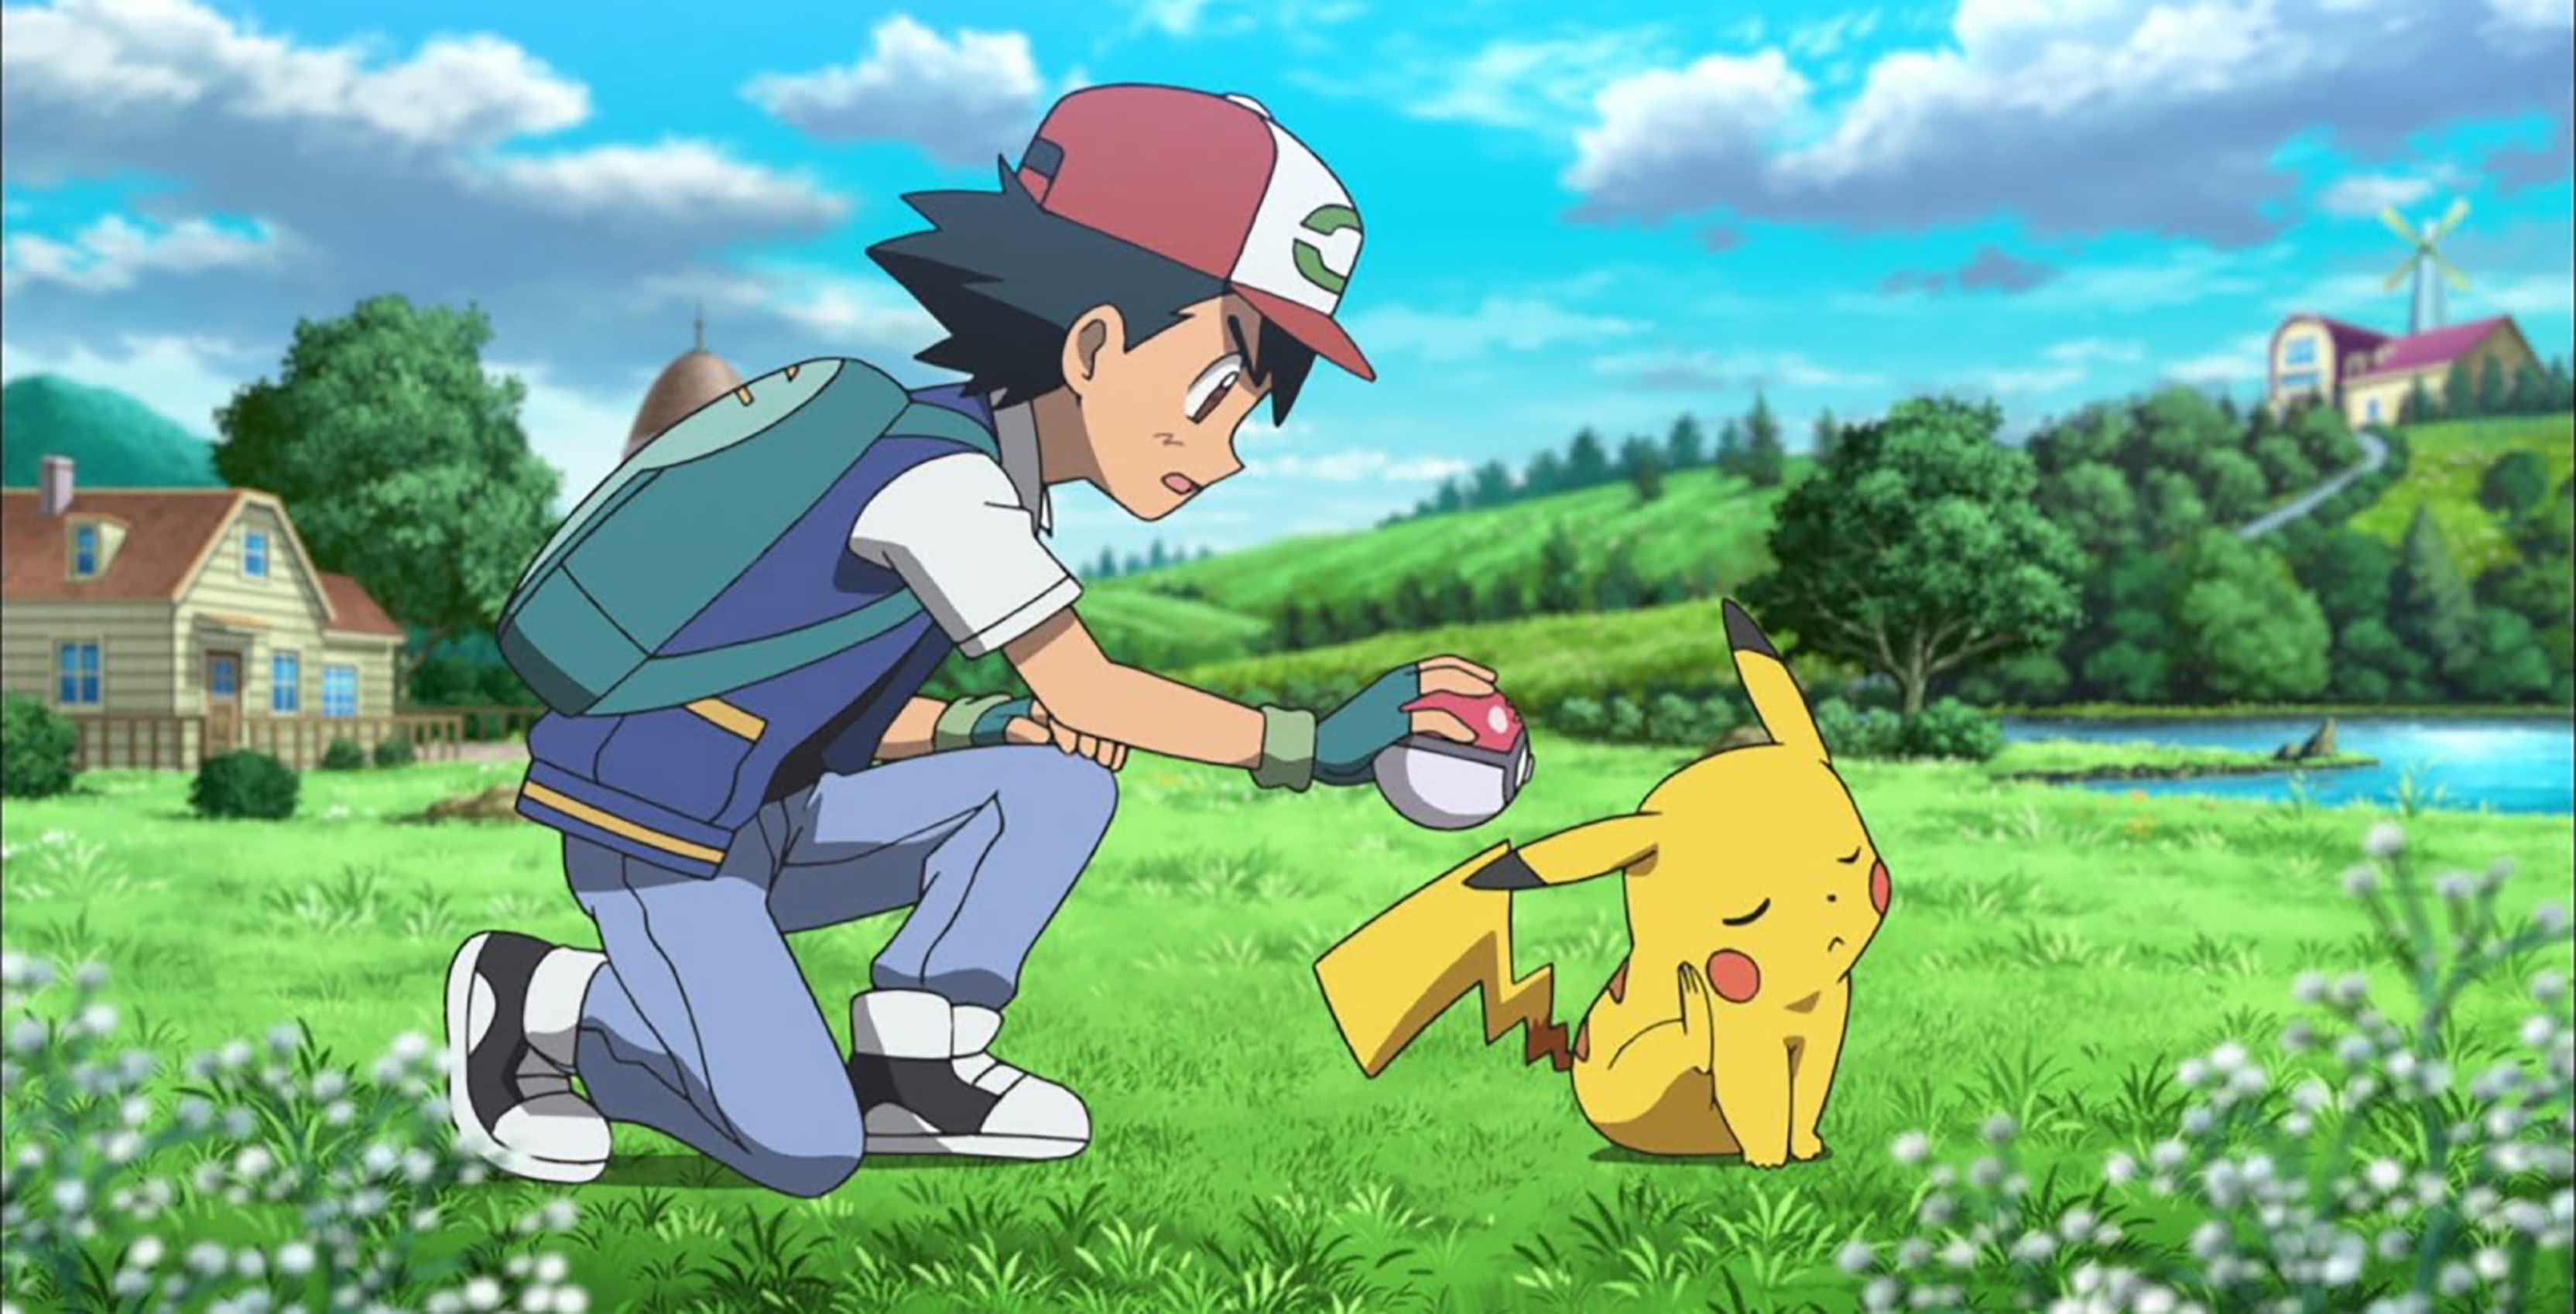 Pokemon Pikachu and Ash